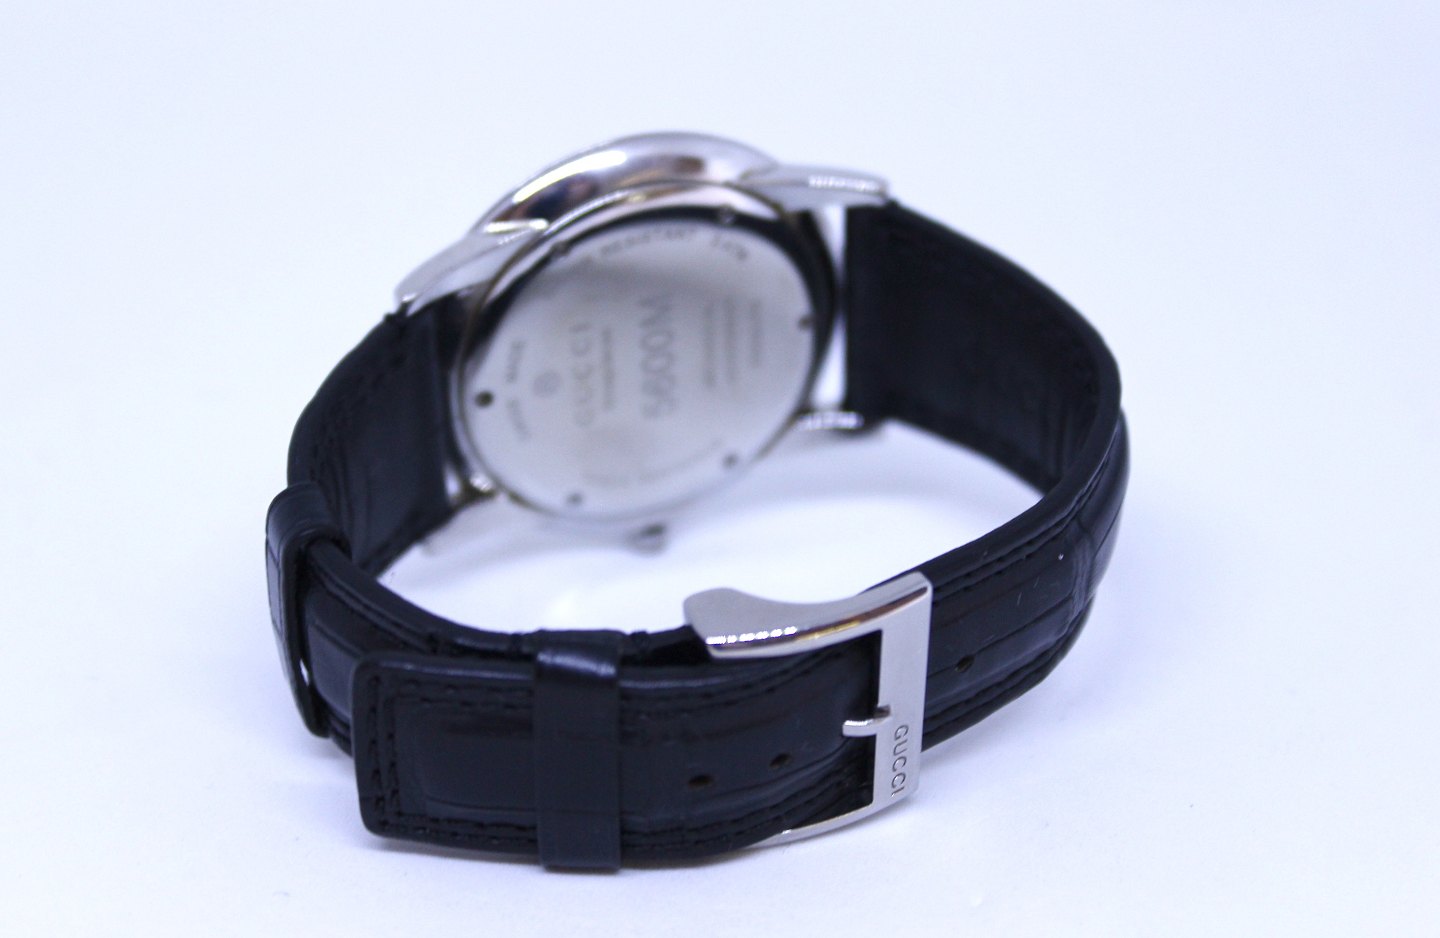 WorldAntique.net - Gucci Timepieces model 5600M wrist watch with